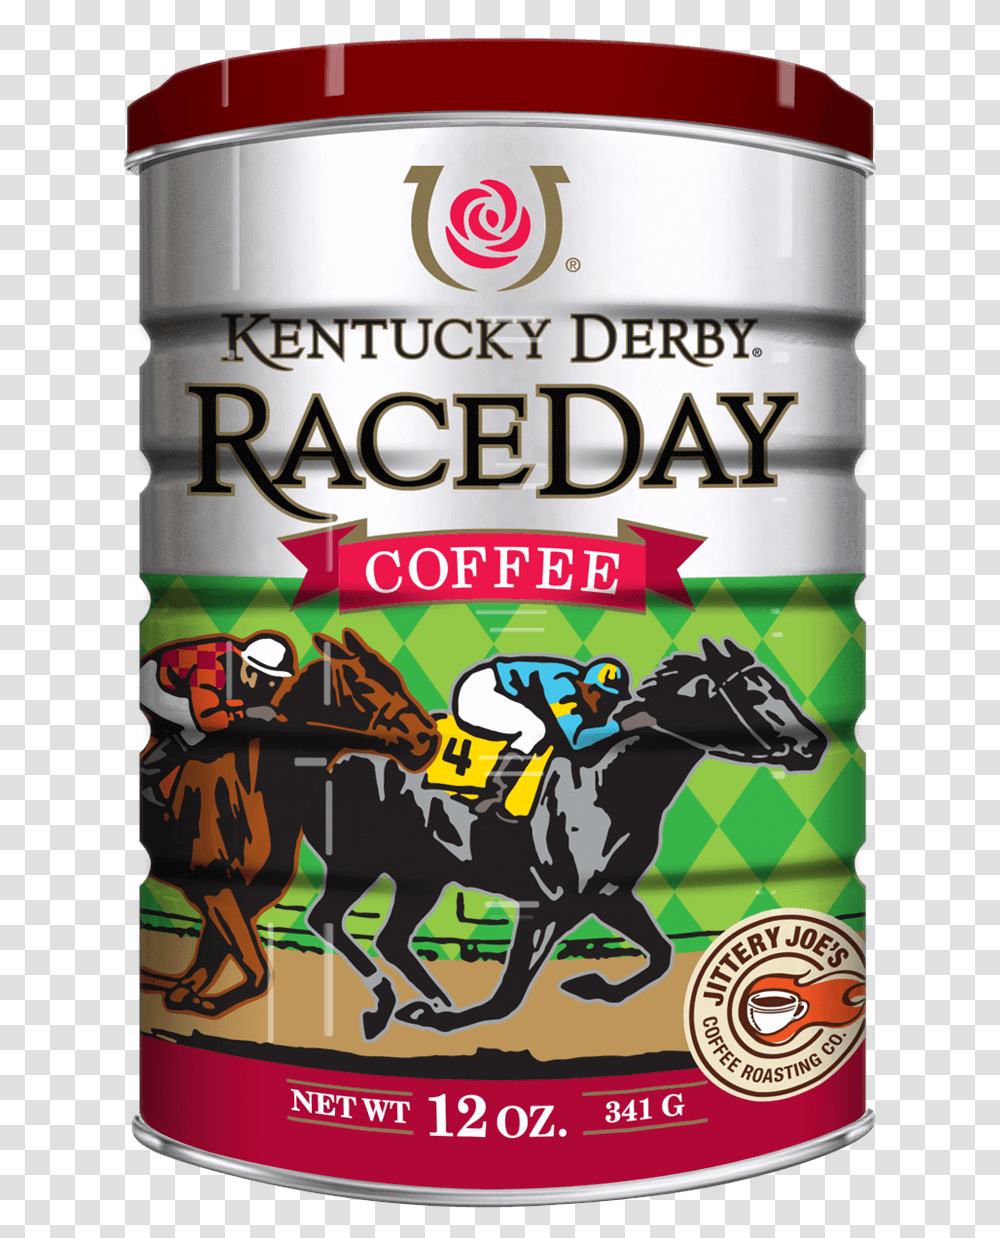 Kentucky Derby Race Day CoffeeClass, Label, Tin, Can Transparent Png